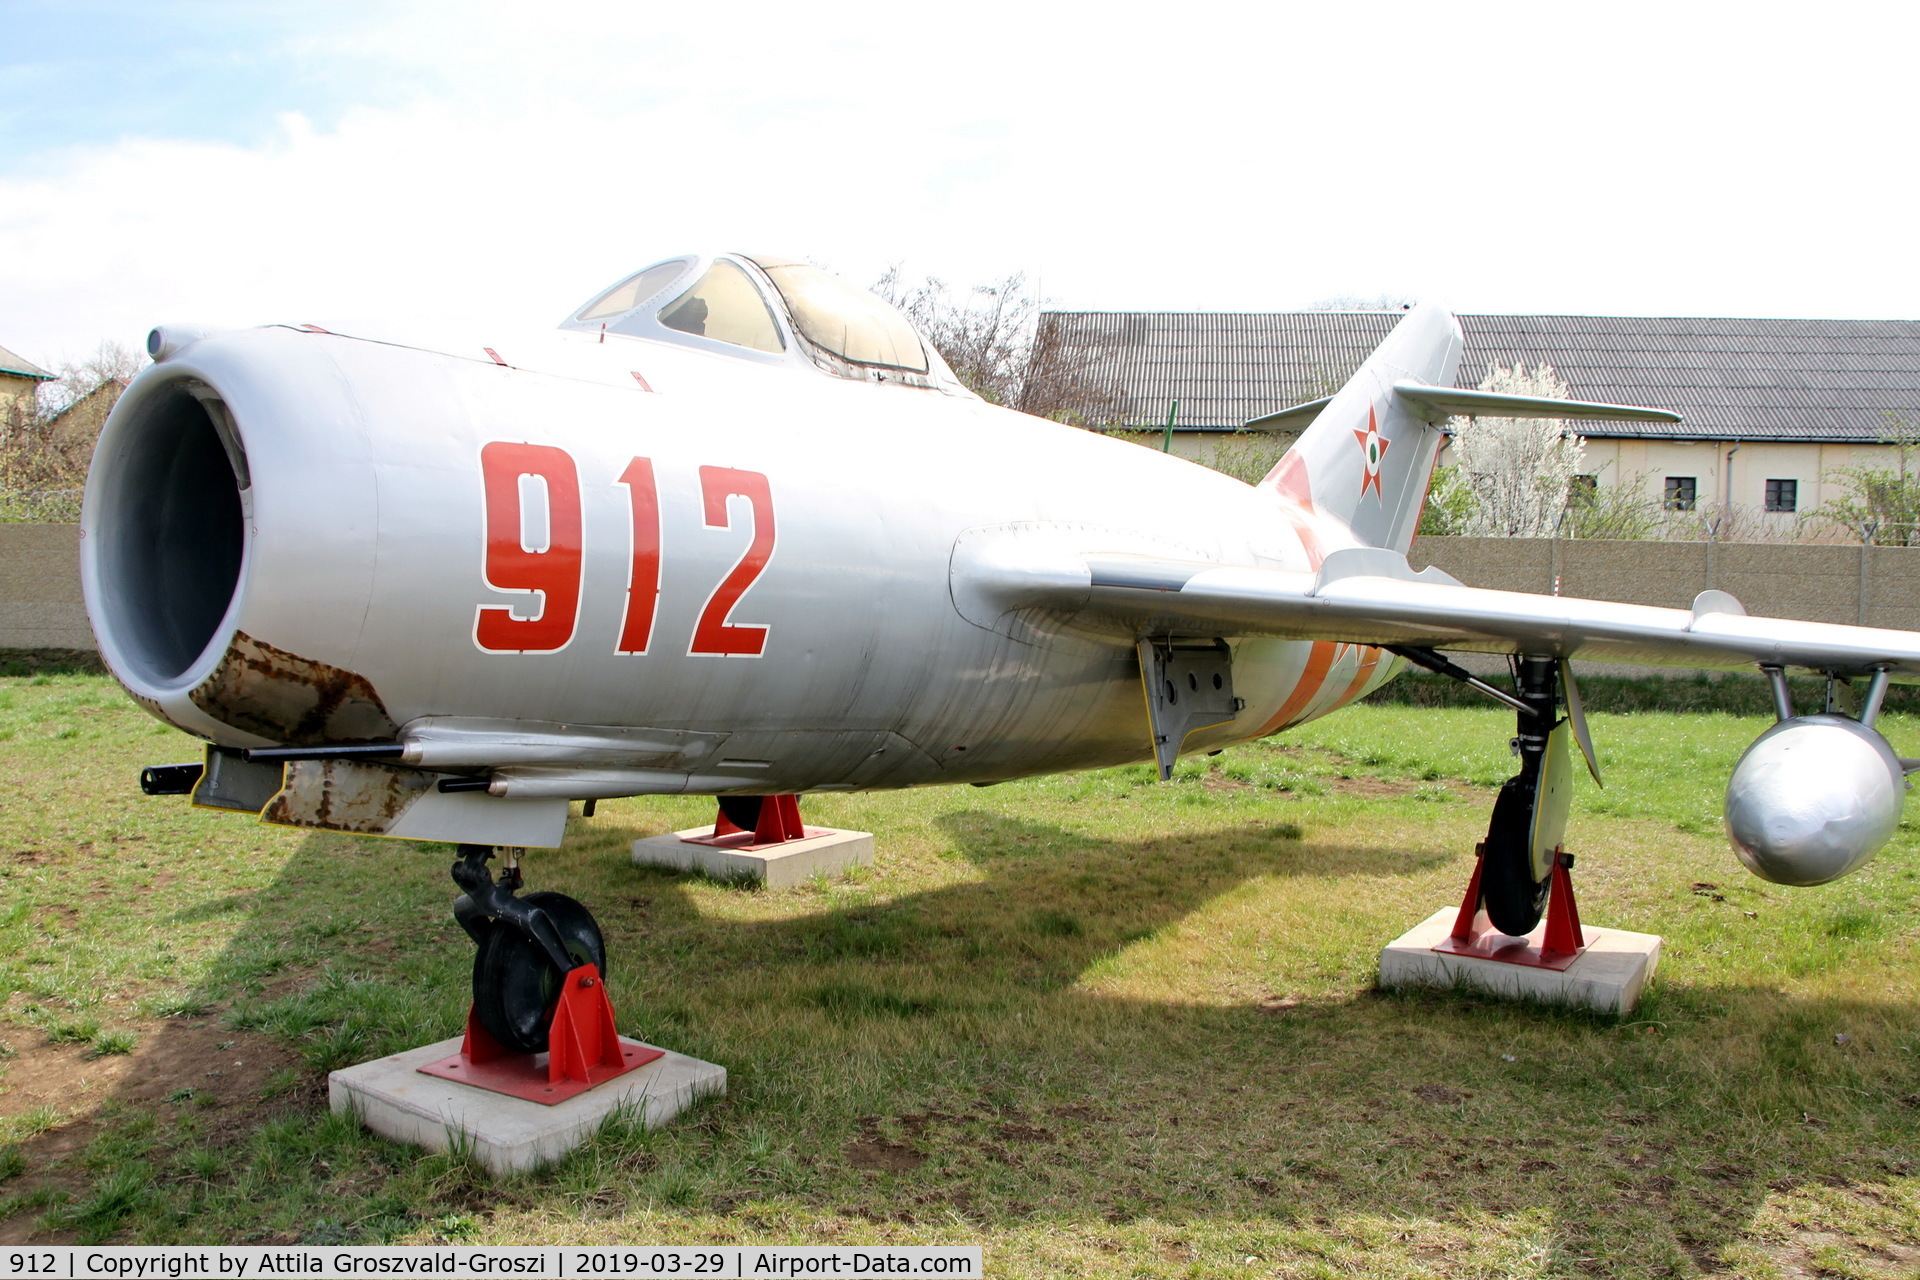 912, Mikoyan-Gurevich MiG-15bis C/N 31530912, RepTár. Szolnok aviation history museum, Hungary